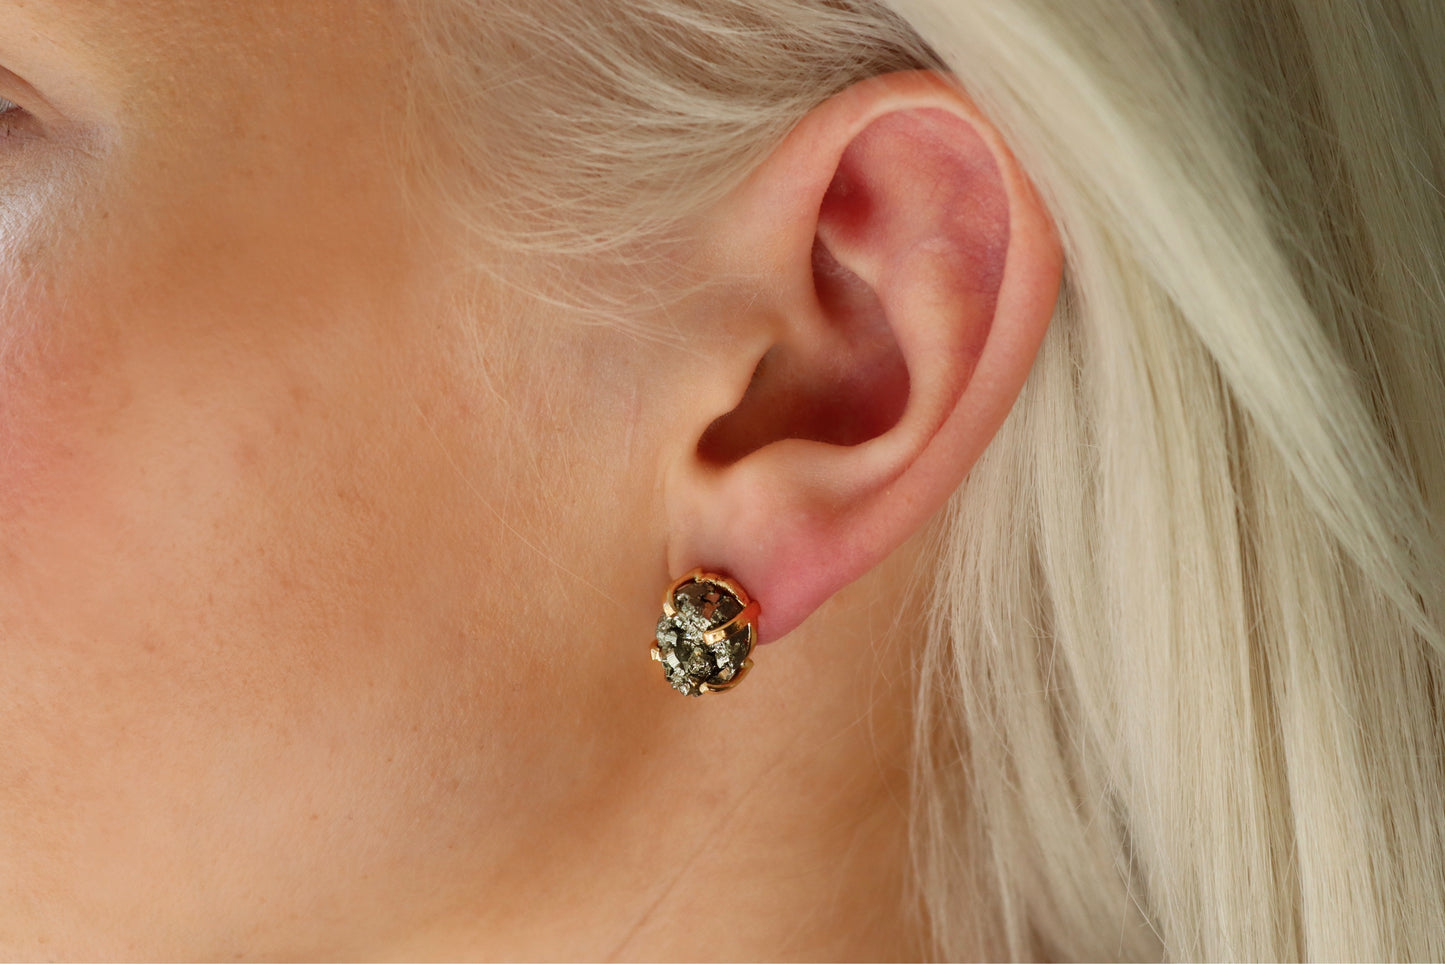 PYRITE earrings